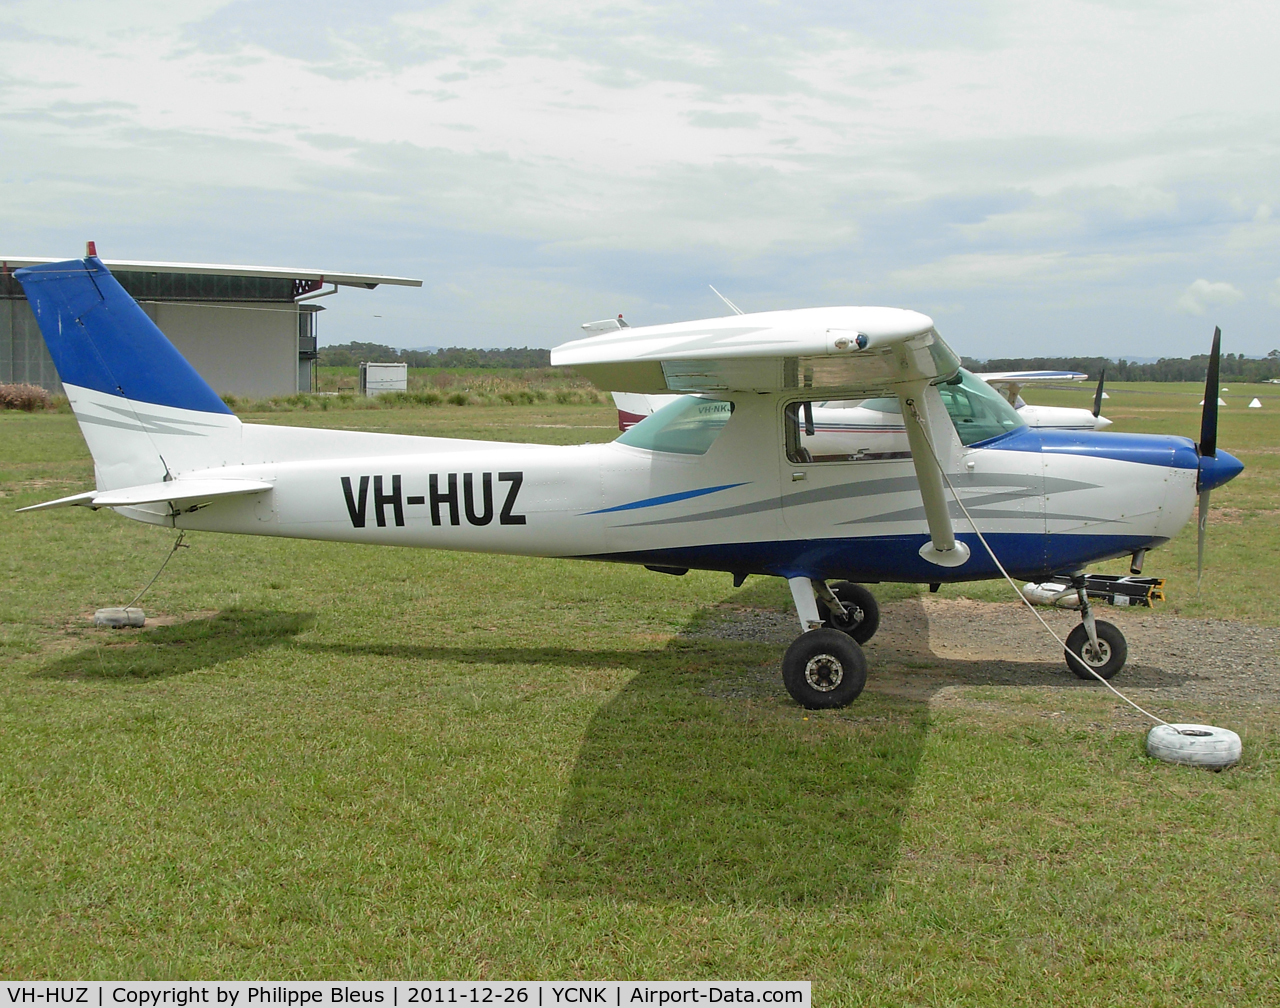 VH-HUZ, Cessna 150 C/N Not found VH-HUZ, Parked on the grass.